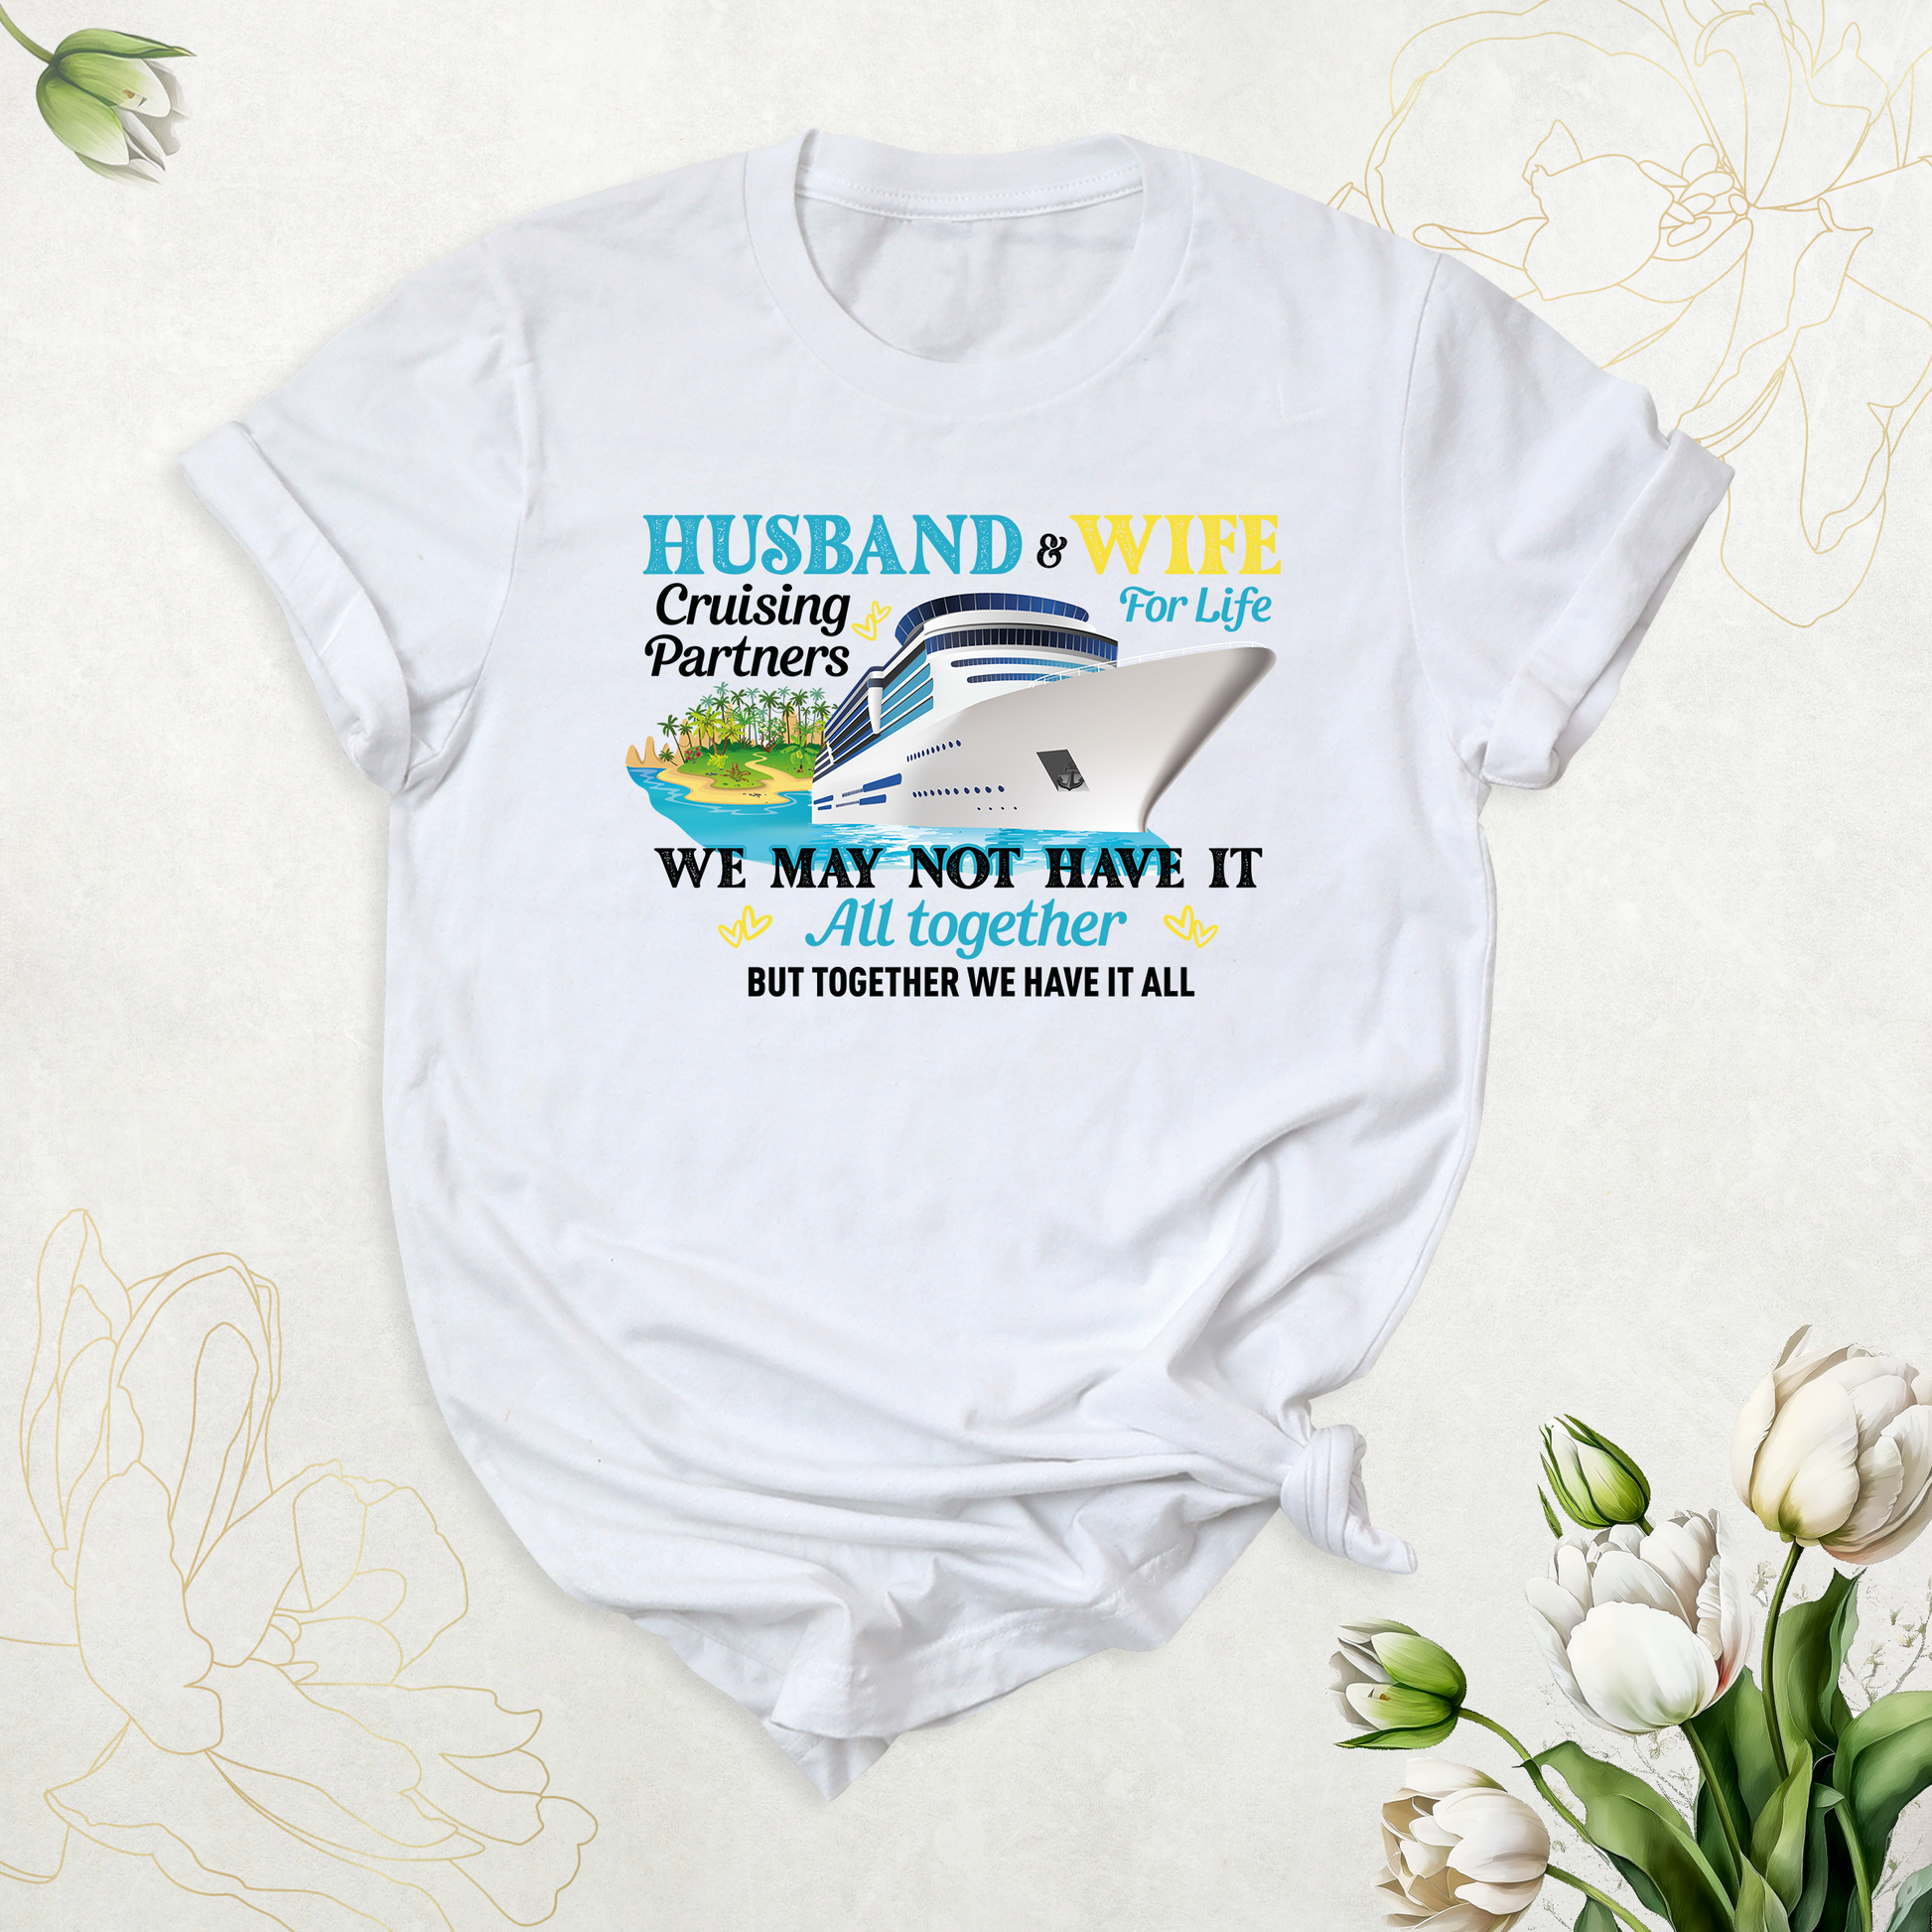 Husband and Wife Cruise Shirts